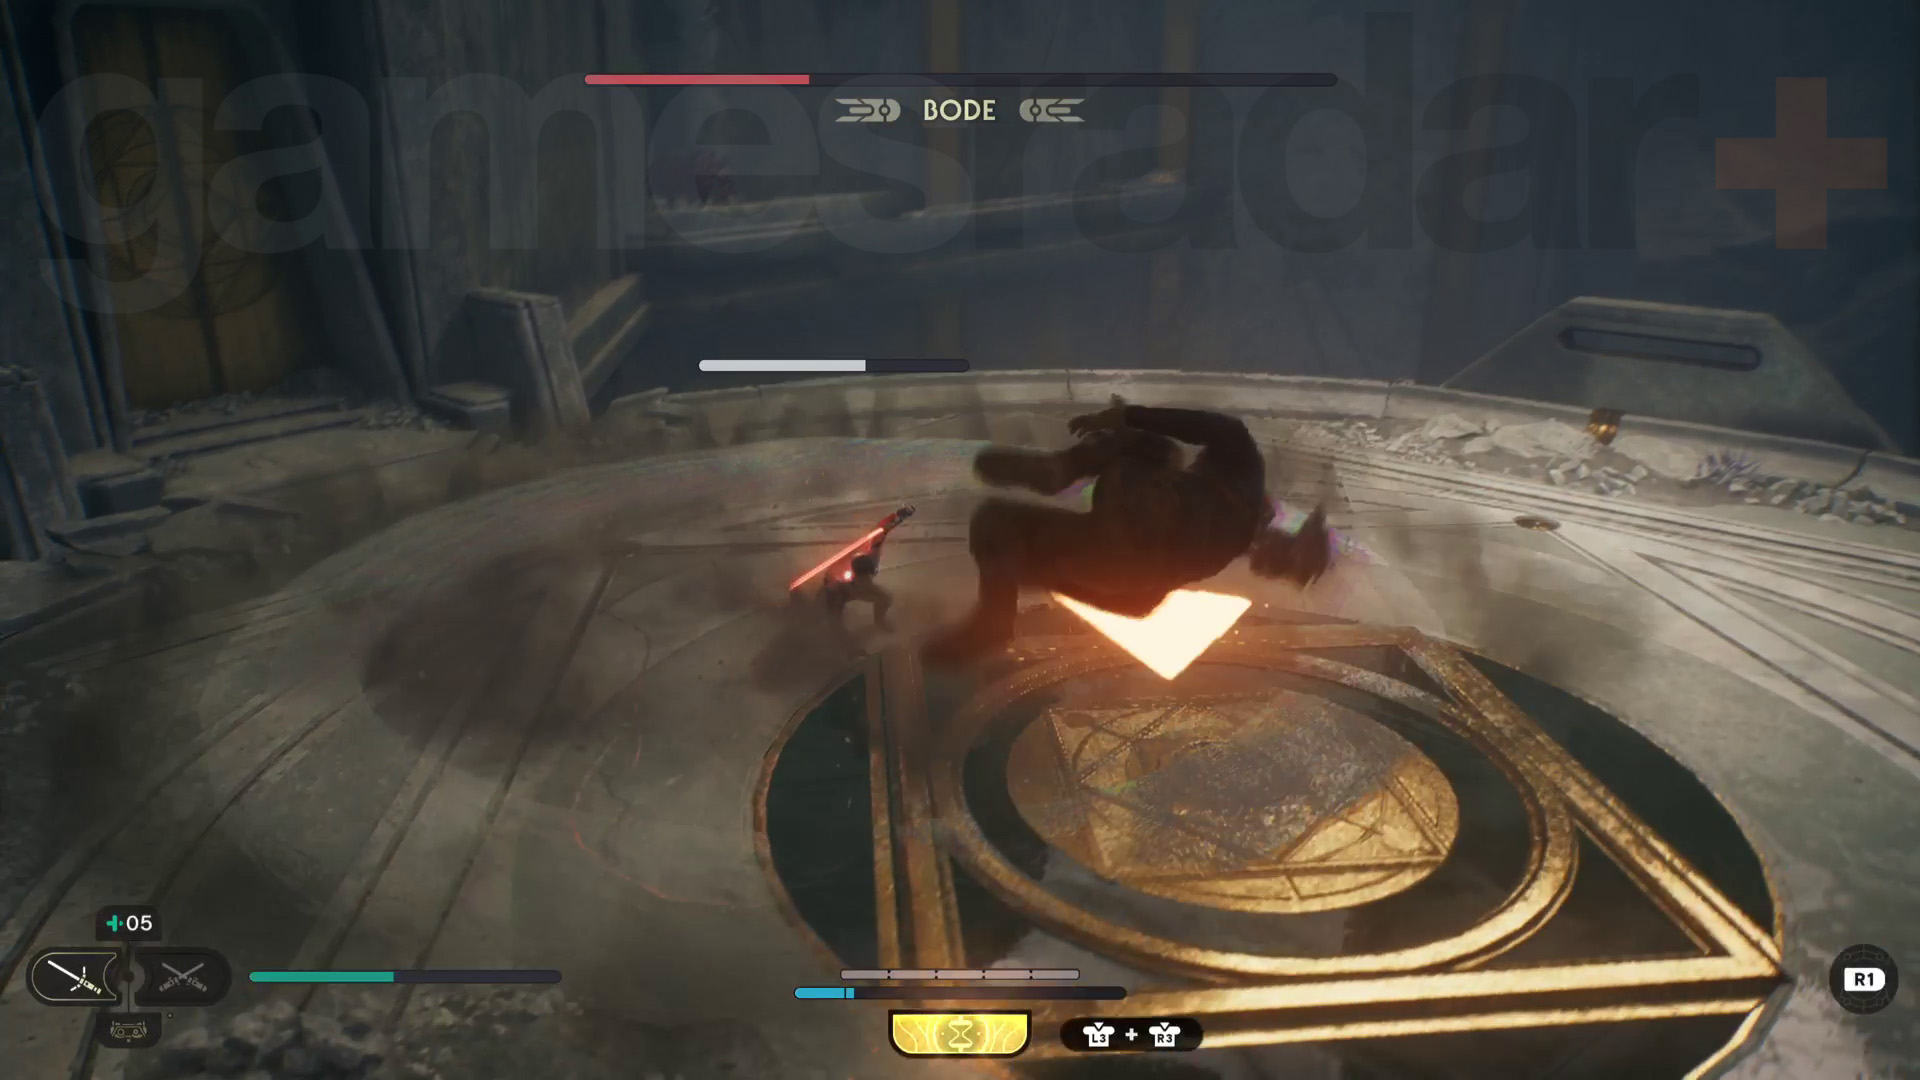 Star Wars Jedi Survivor Tanalorr walkthrough Cal saltando sobre uno de los ataques de onda expansiva de Bode